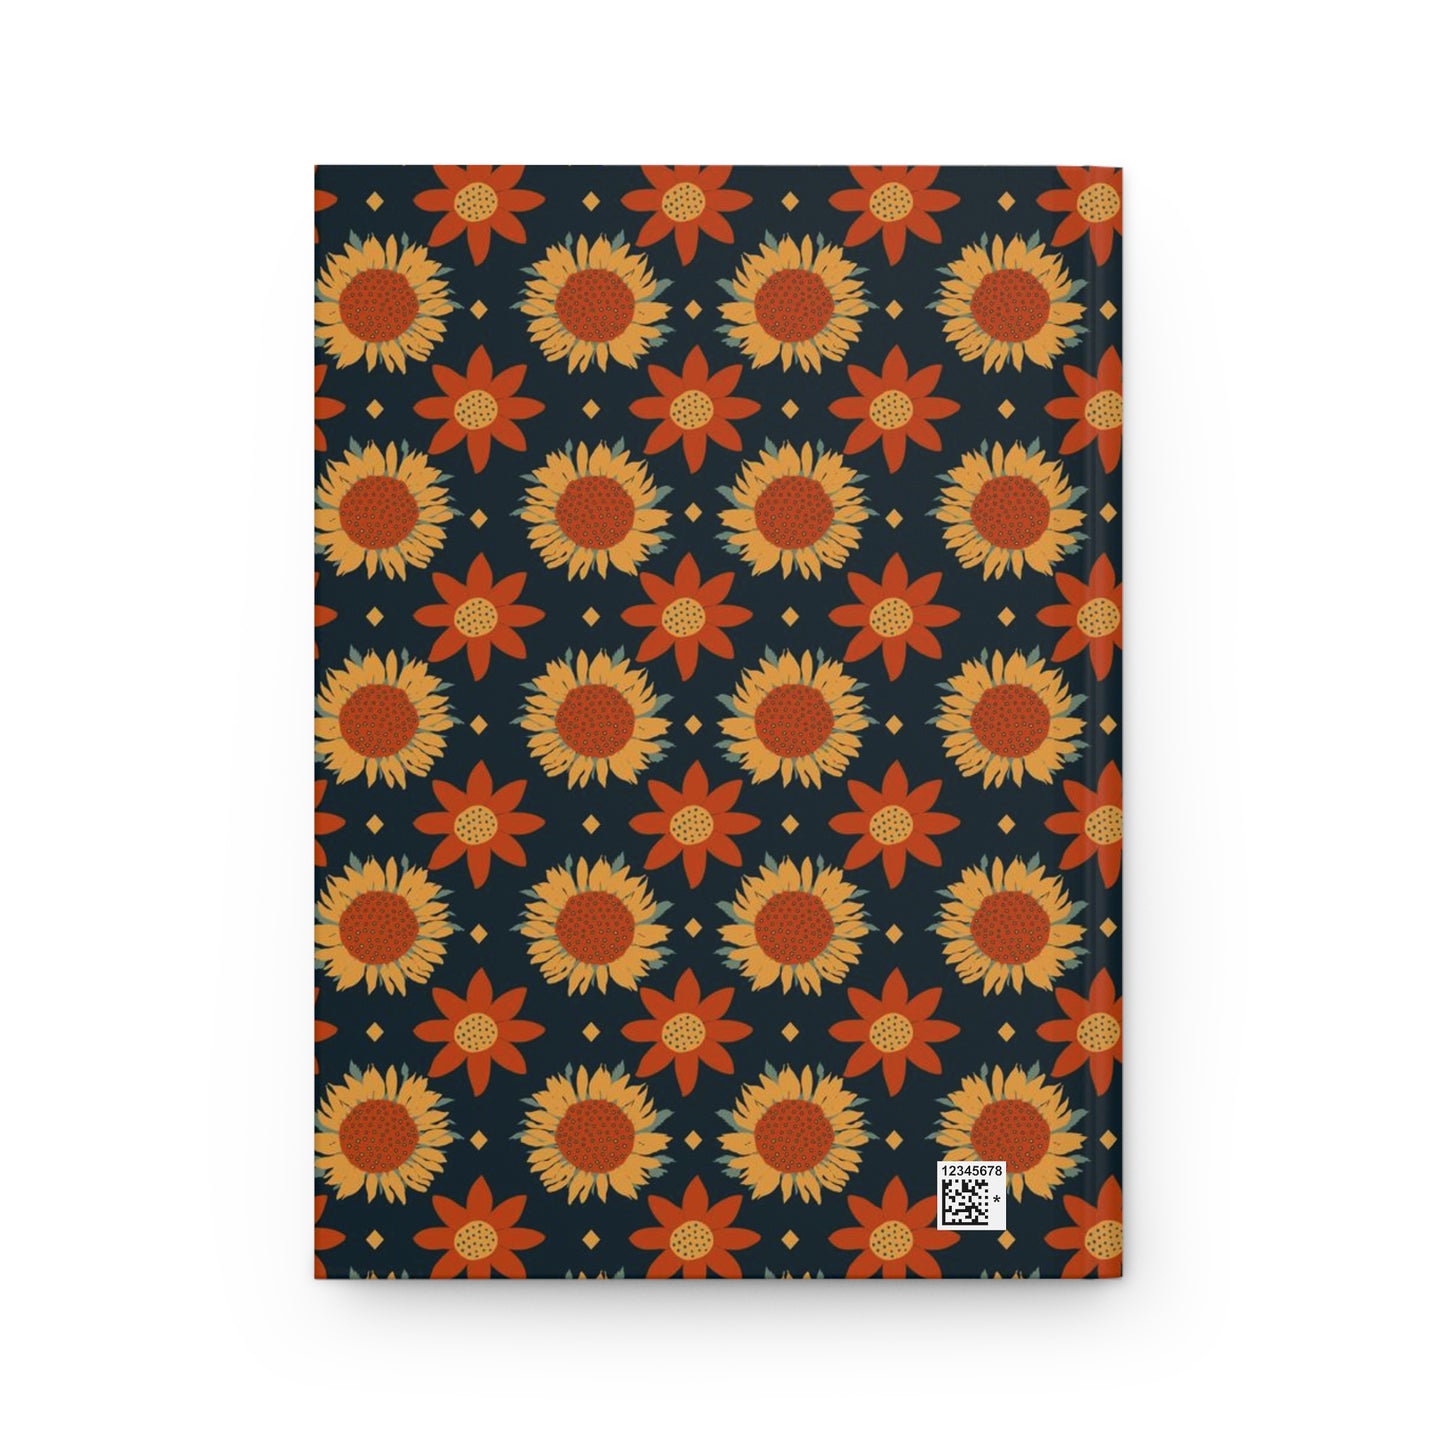 Retro Sunflowers on Dark Blue Hardcover Journal Matte